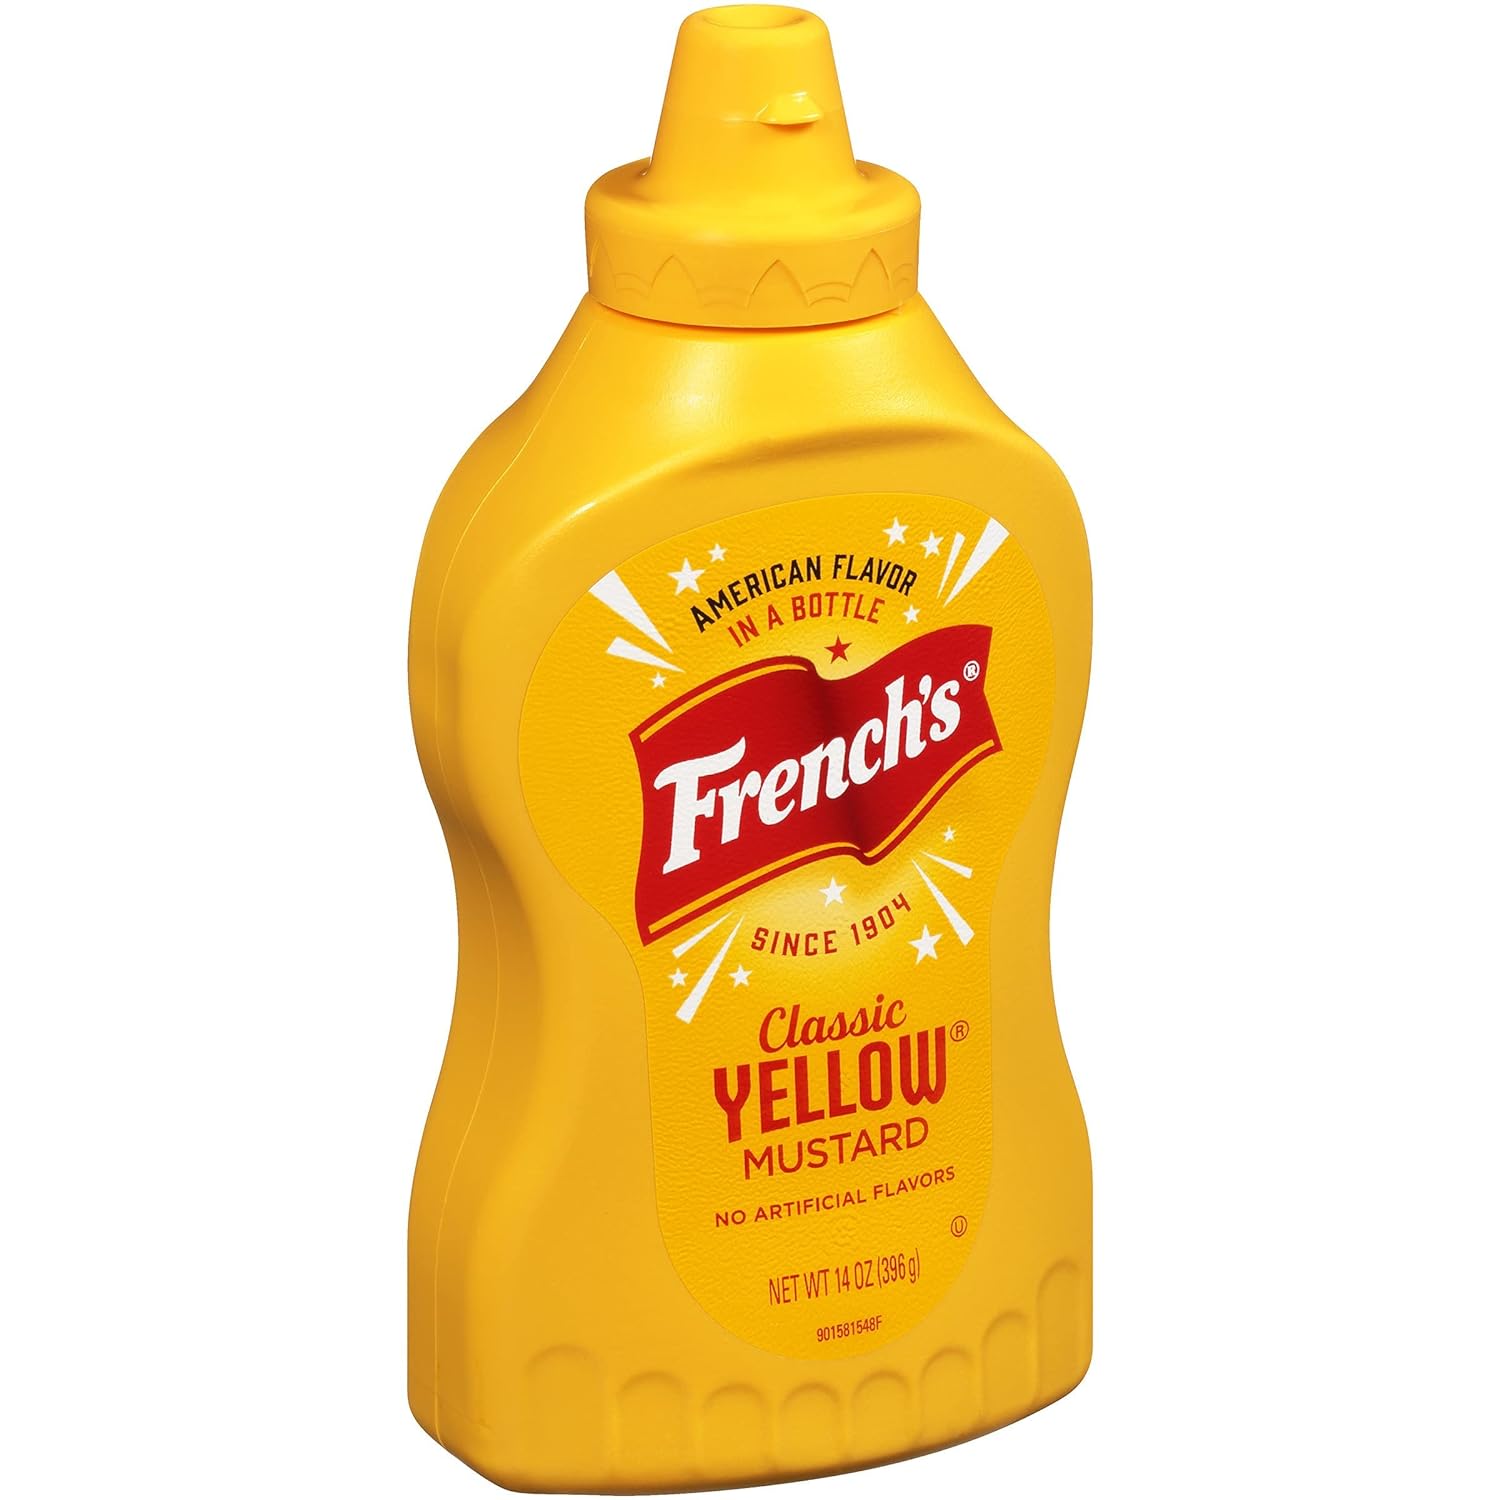 French's classic yellow mustard